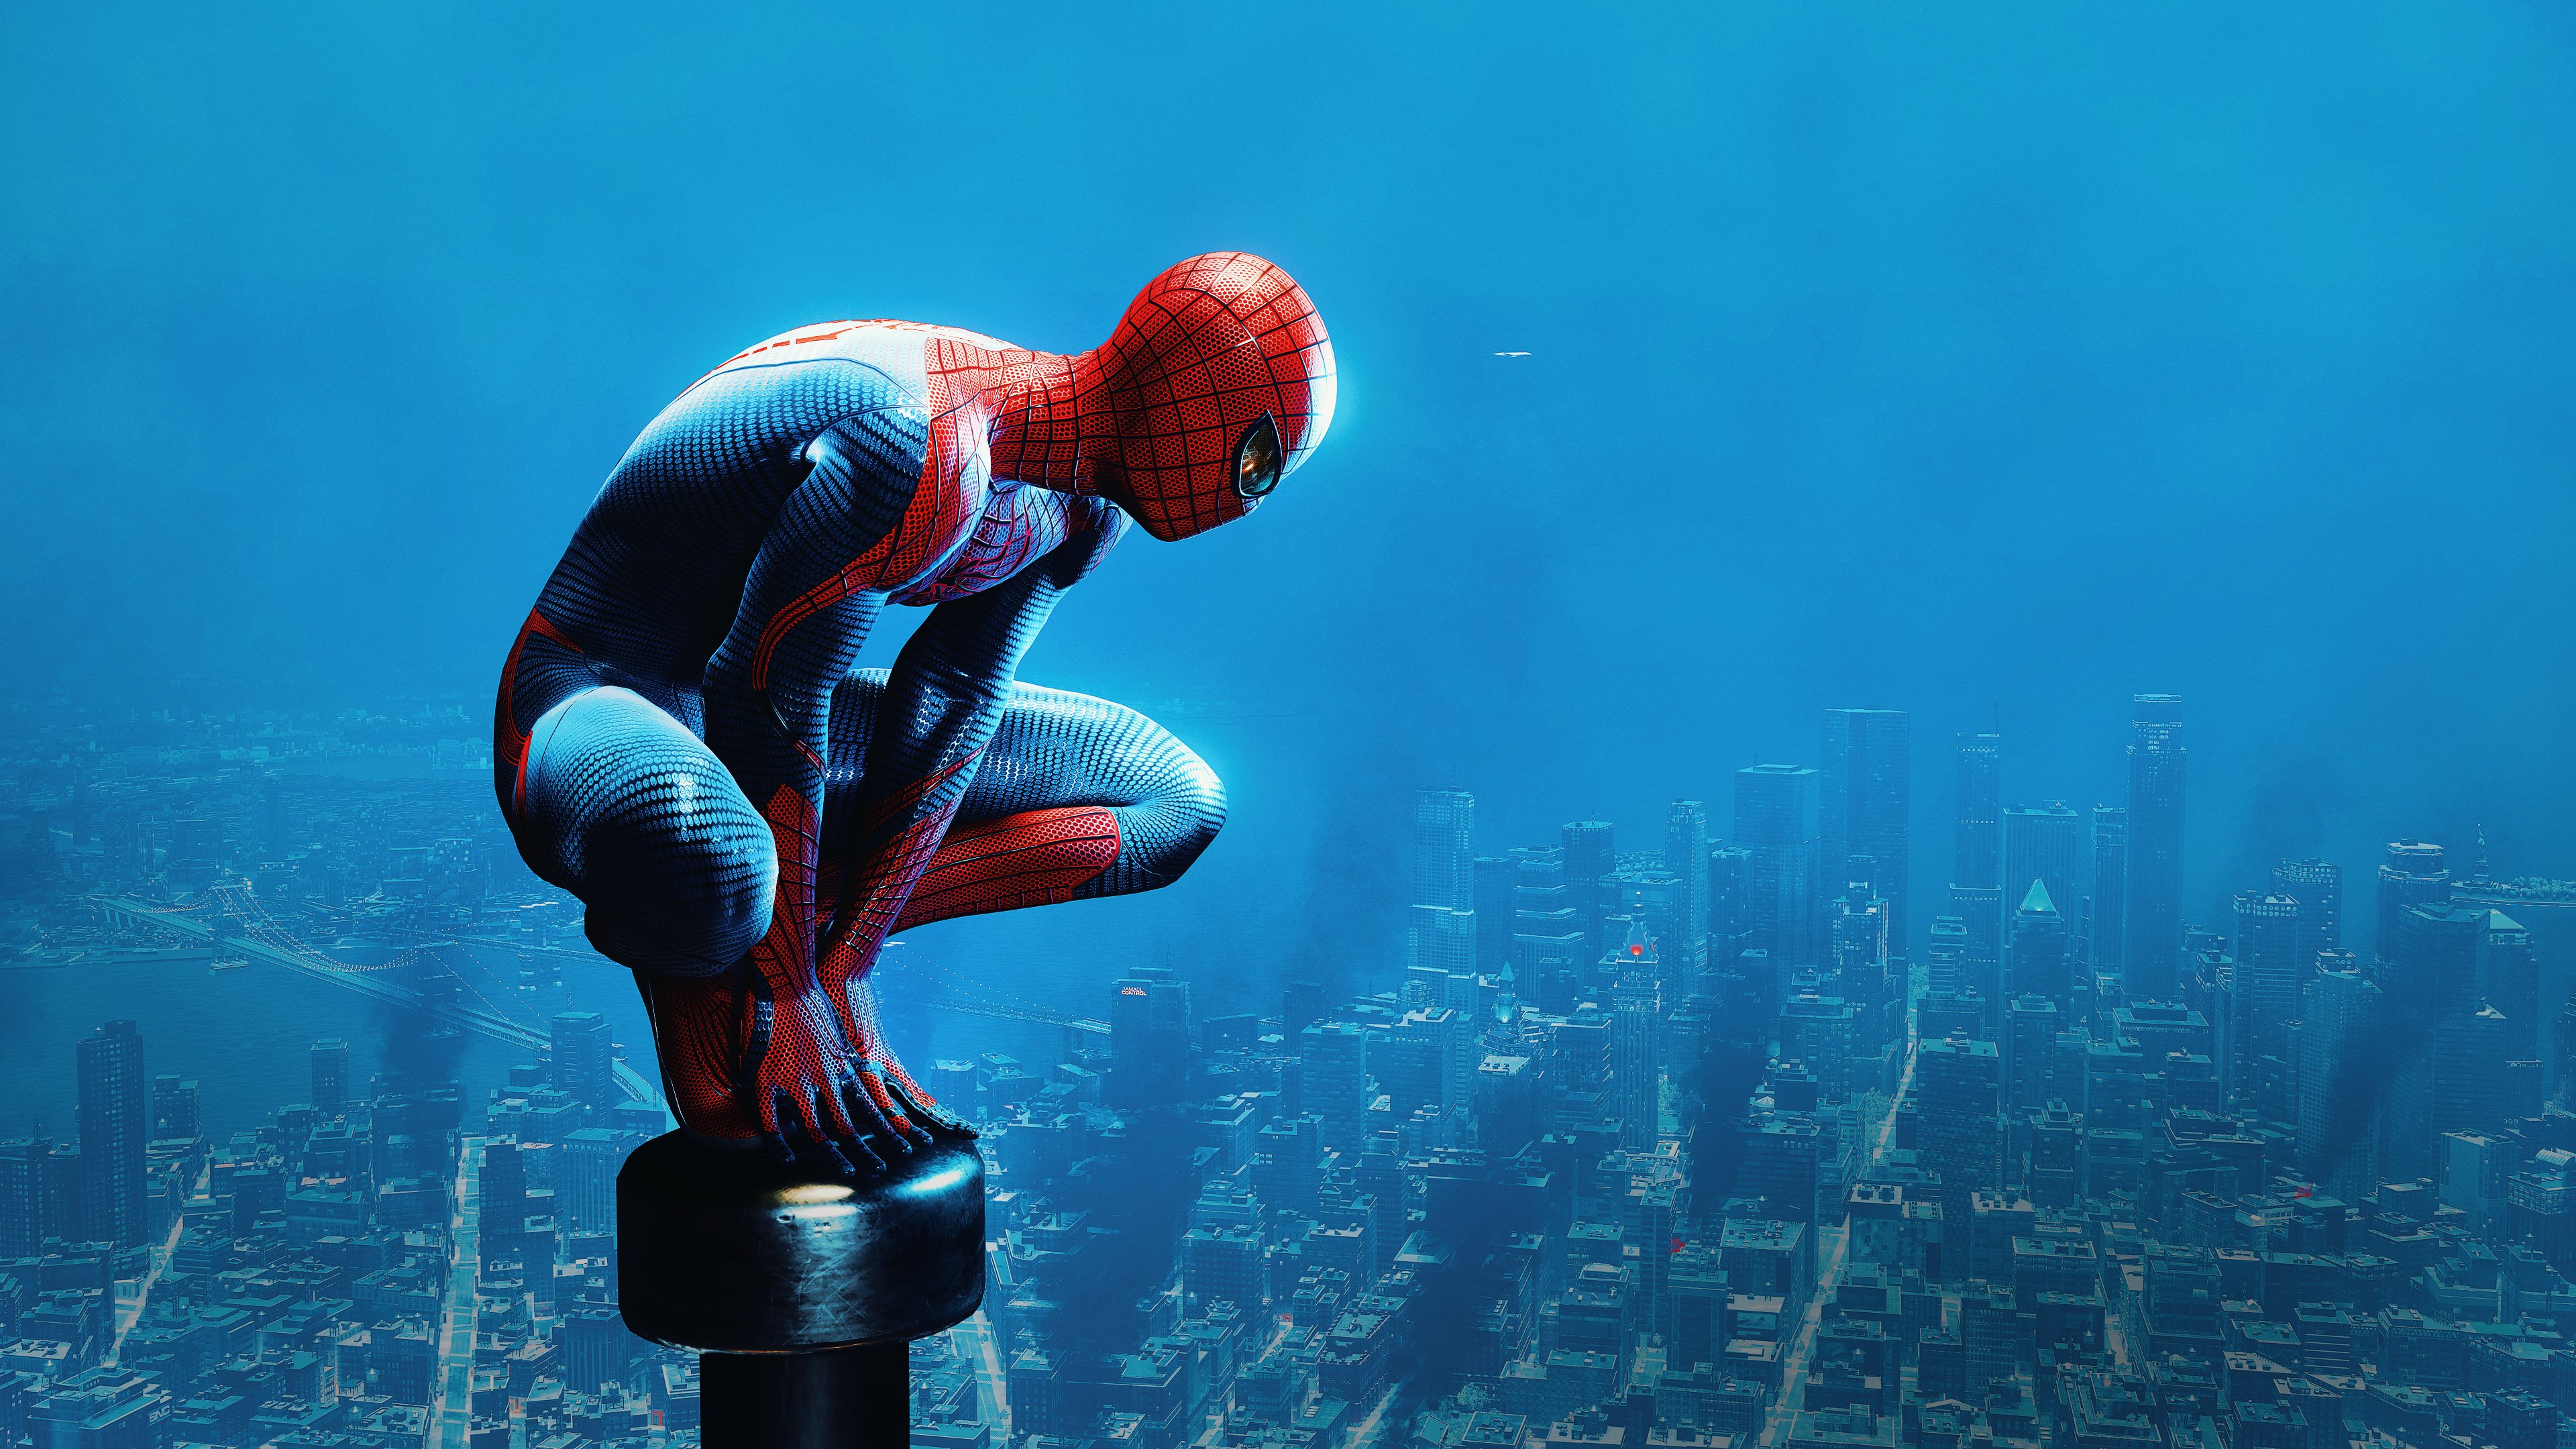 Marvel's Spider-Man Remastered Wallpaper 4K, Video Game, PC Games